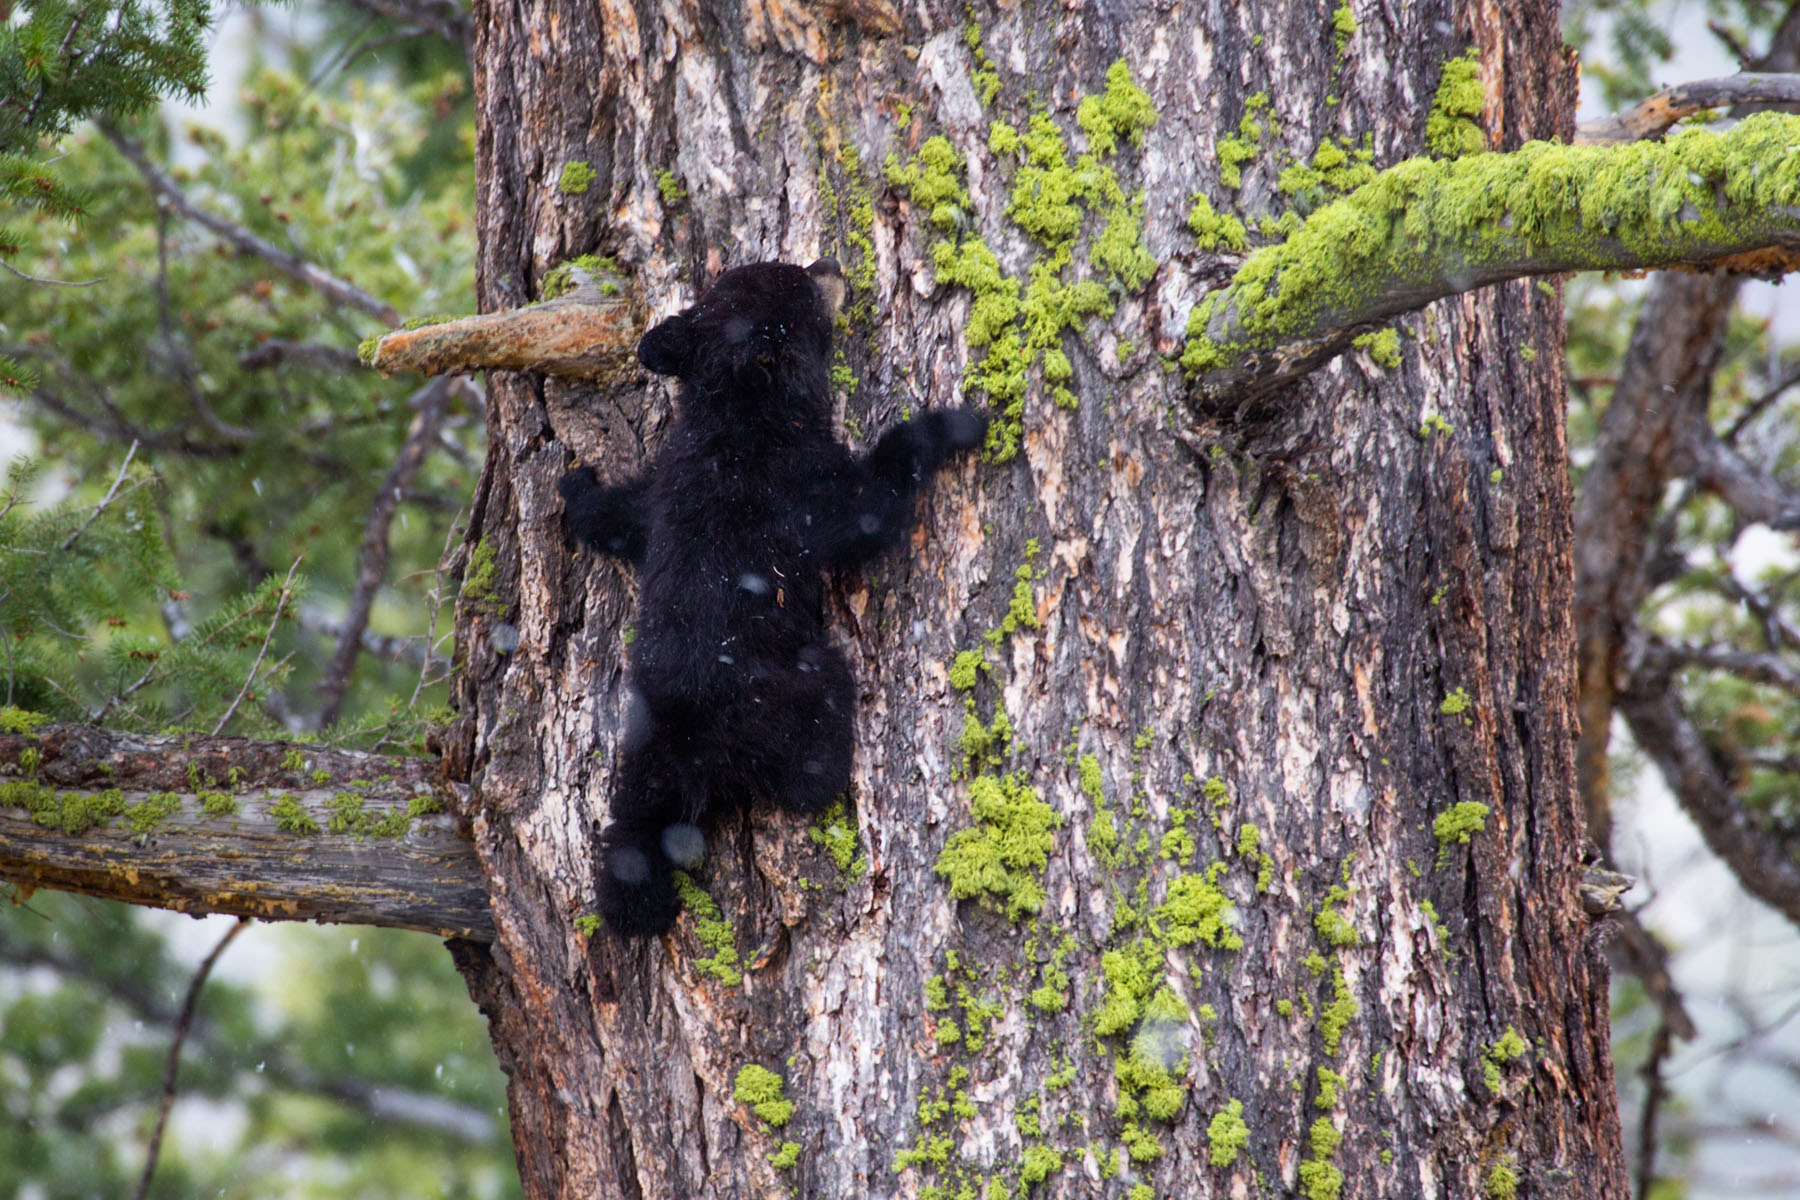 Black bear cub climbs a tree near Tower Falls, Yellowstone.  Click for next photo.